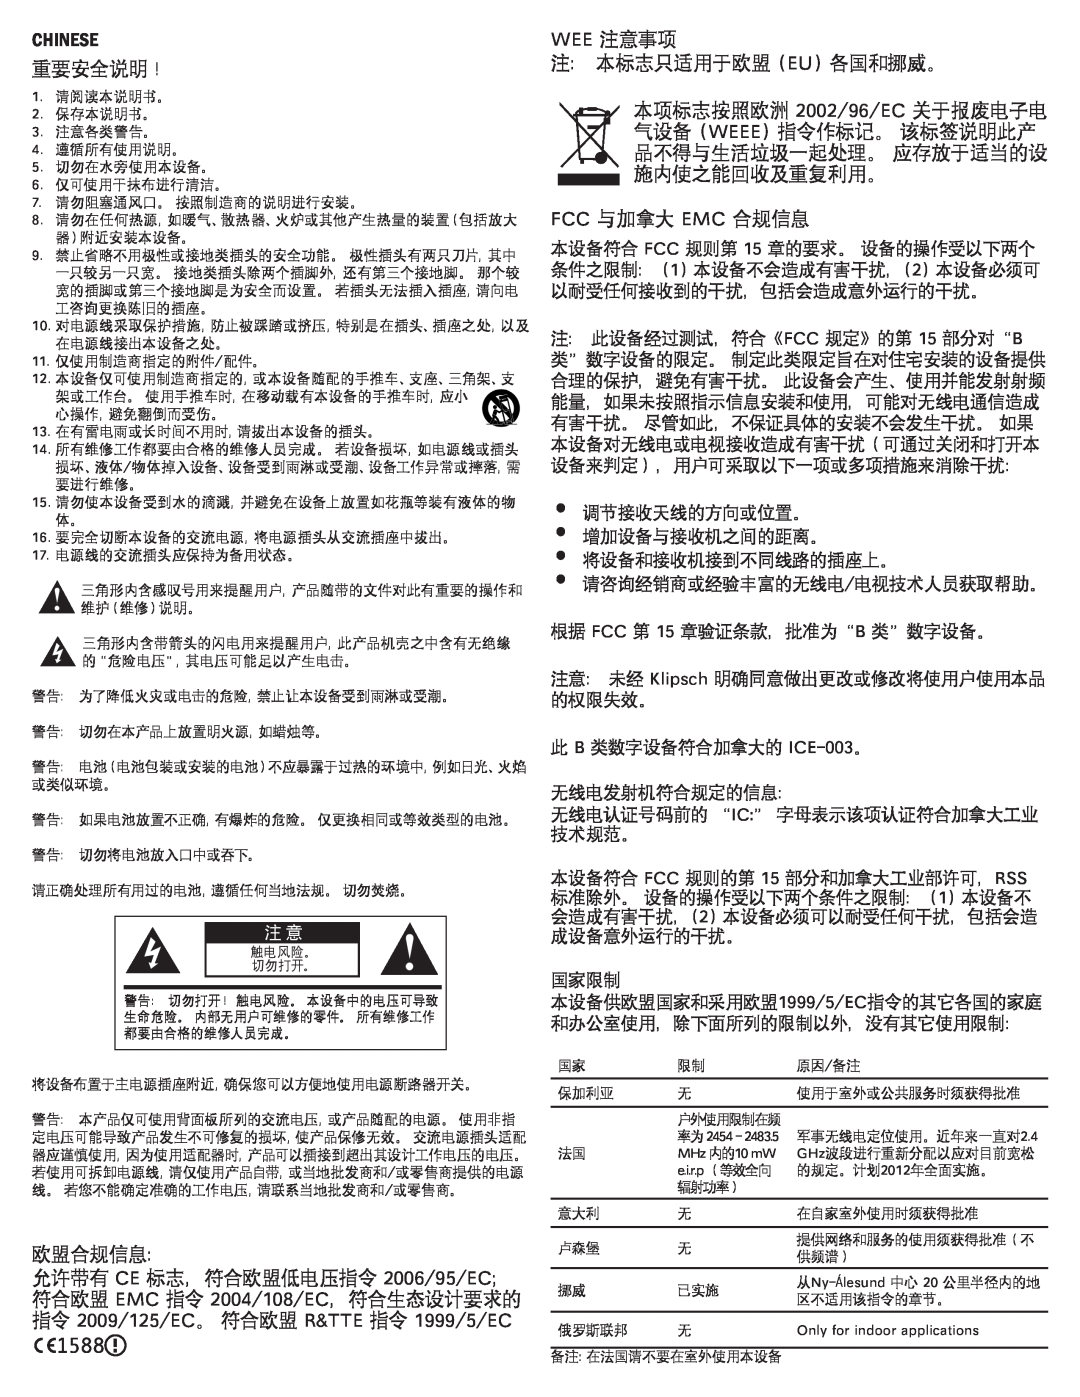 Klipsch G-17 AIR owner manual Chinese, 重要安全说明！, 欧盟合规信息：, Wee 注意事项, 注： 本标志只适用于欧盟 Eu 各国和挪威。, Fcc 与加拿大 Emc 合规信息 